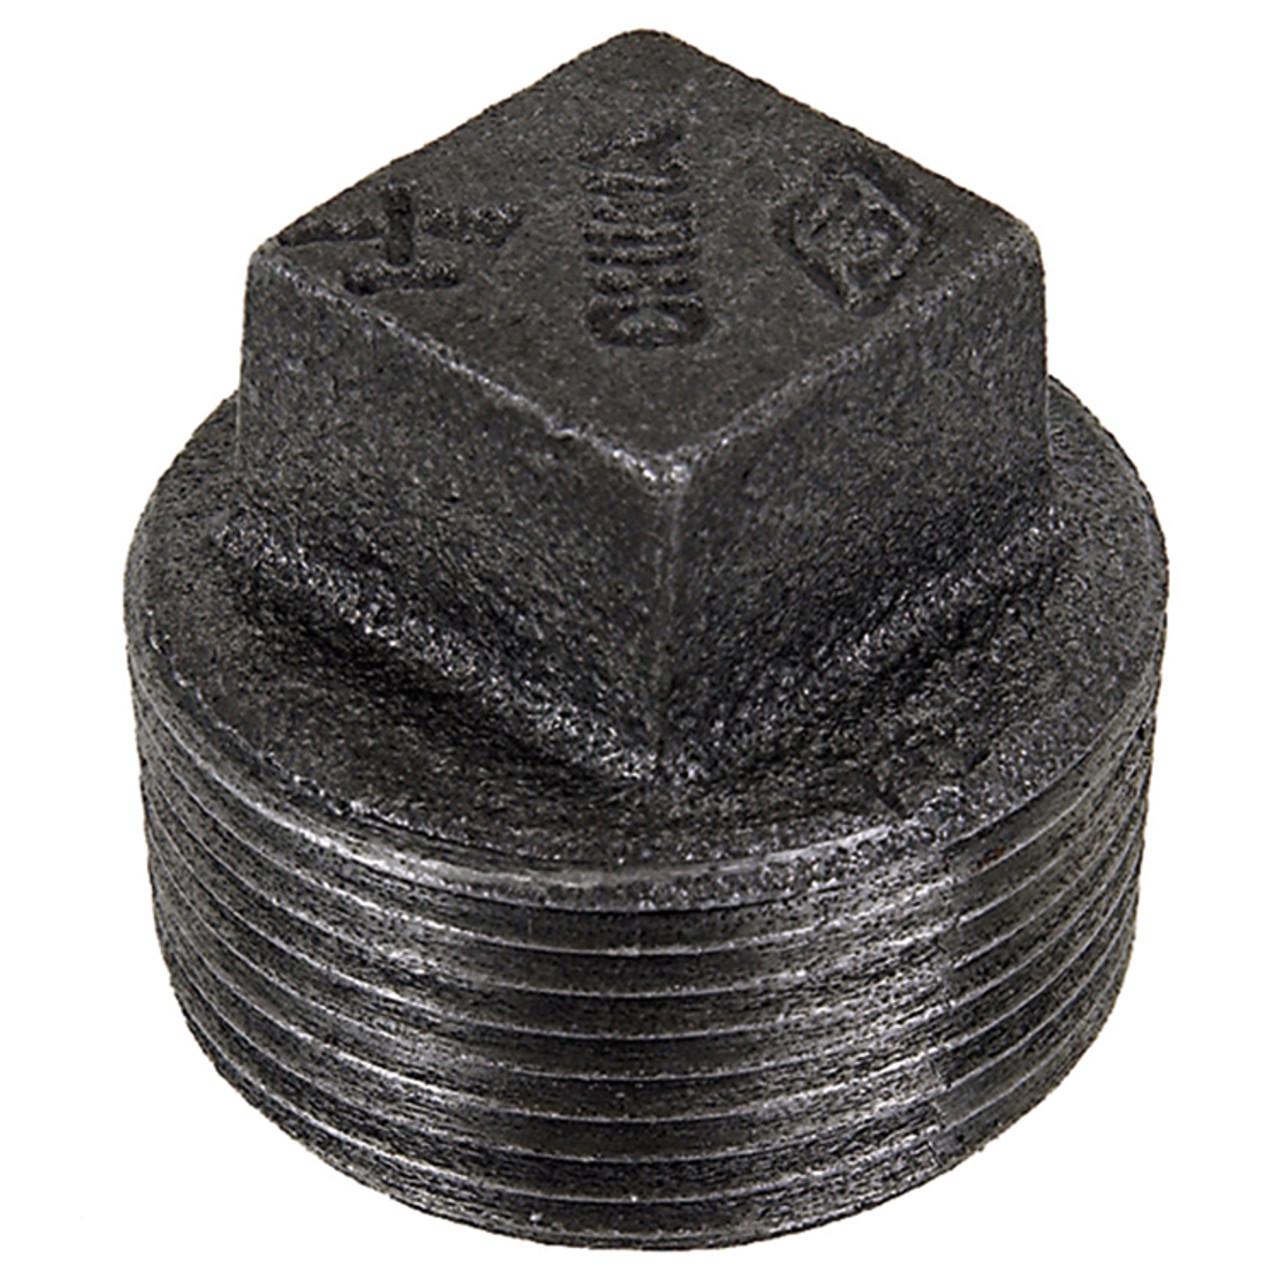 3/4" Sch. 40 Black Iron Male NPT Plug   G1600M-075